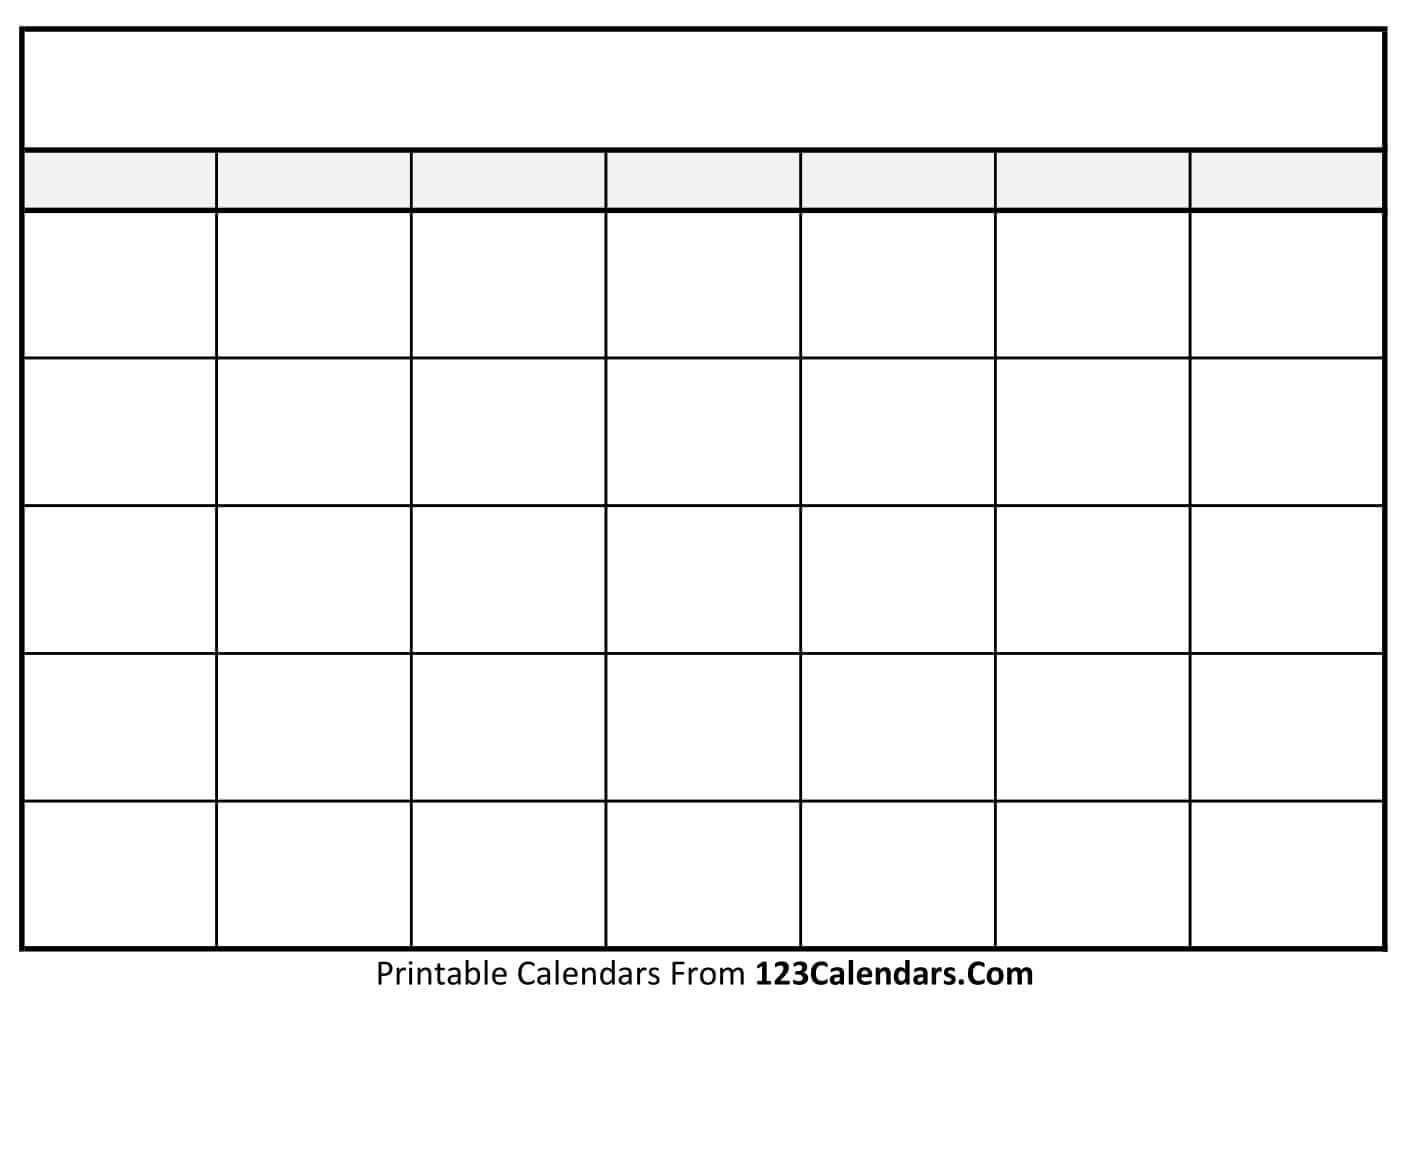 010 Blank Calendar Template Ideas Striking Printable Free With Full Page Blank Calendar Template